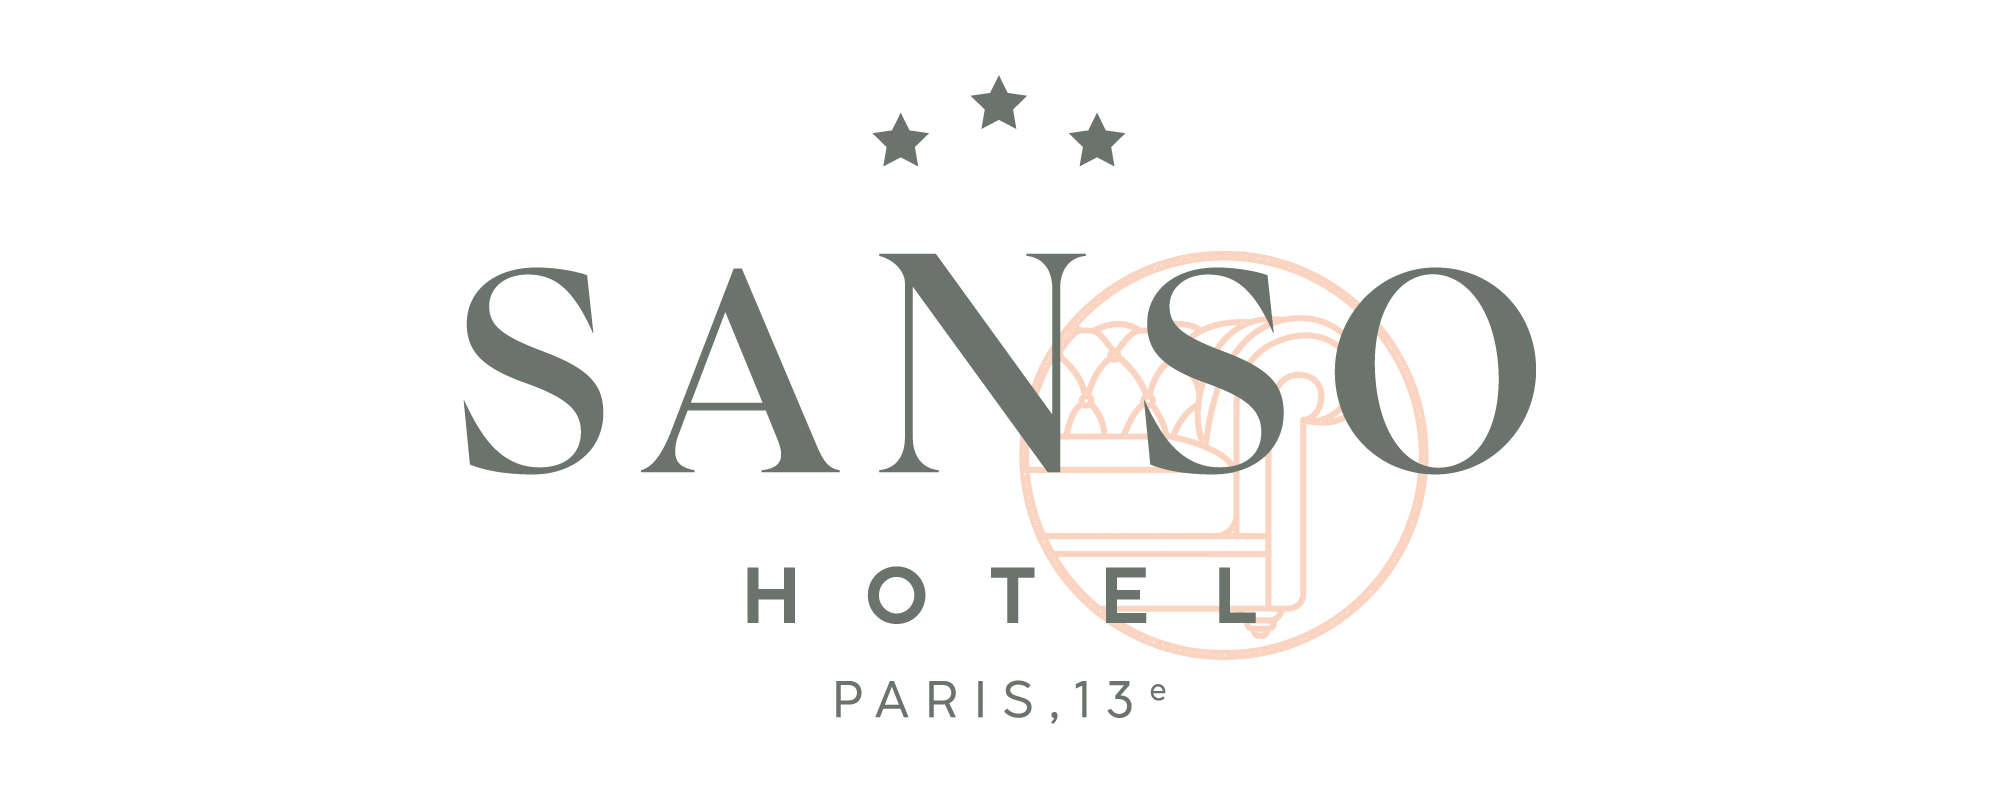 Sanso hotel primary logo